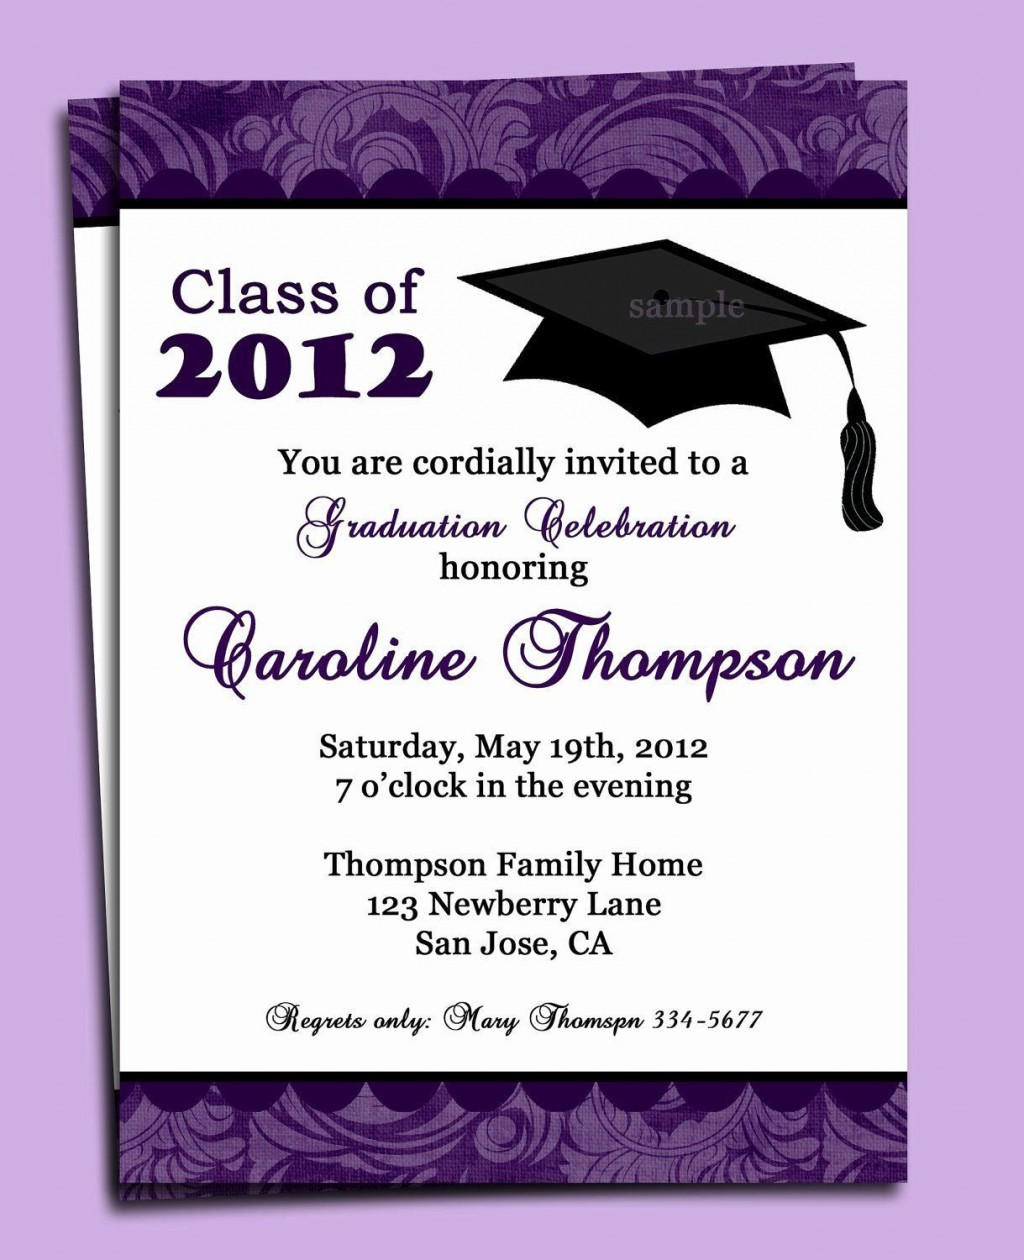 Graduation Party Invitation Template Free Graduation Party Invitation Templates Addictionary